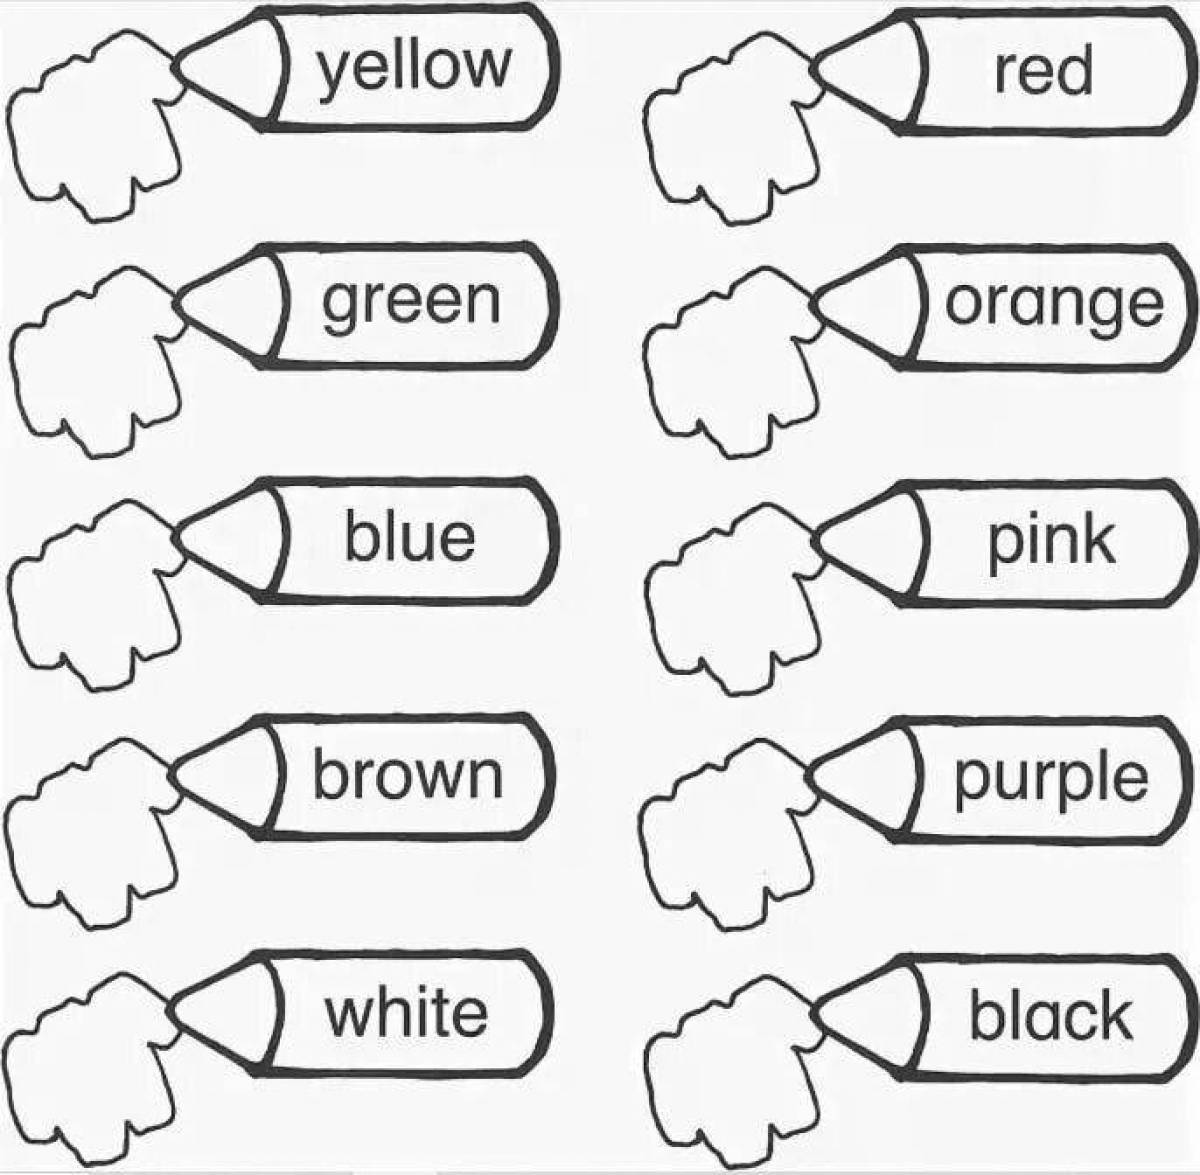 Brilliant coloring english colors